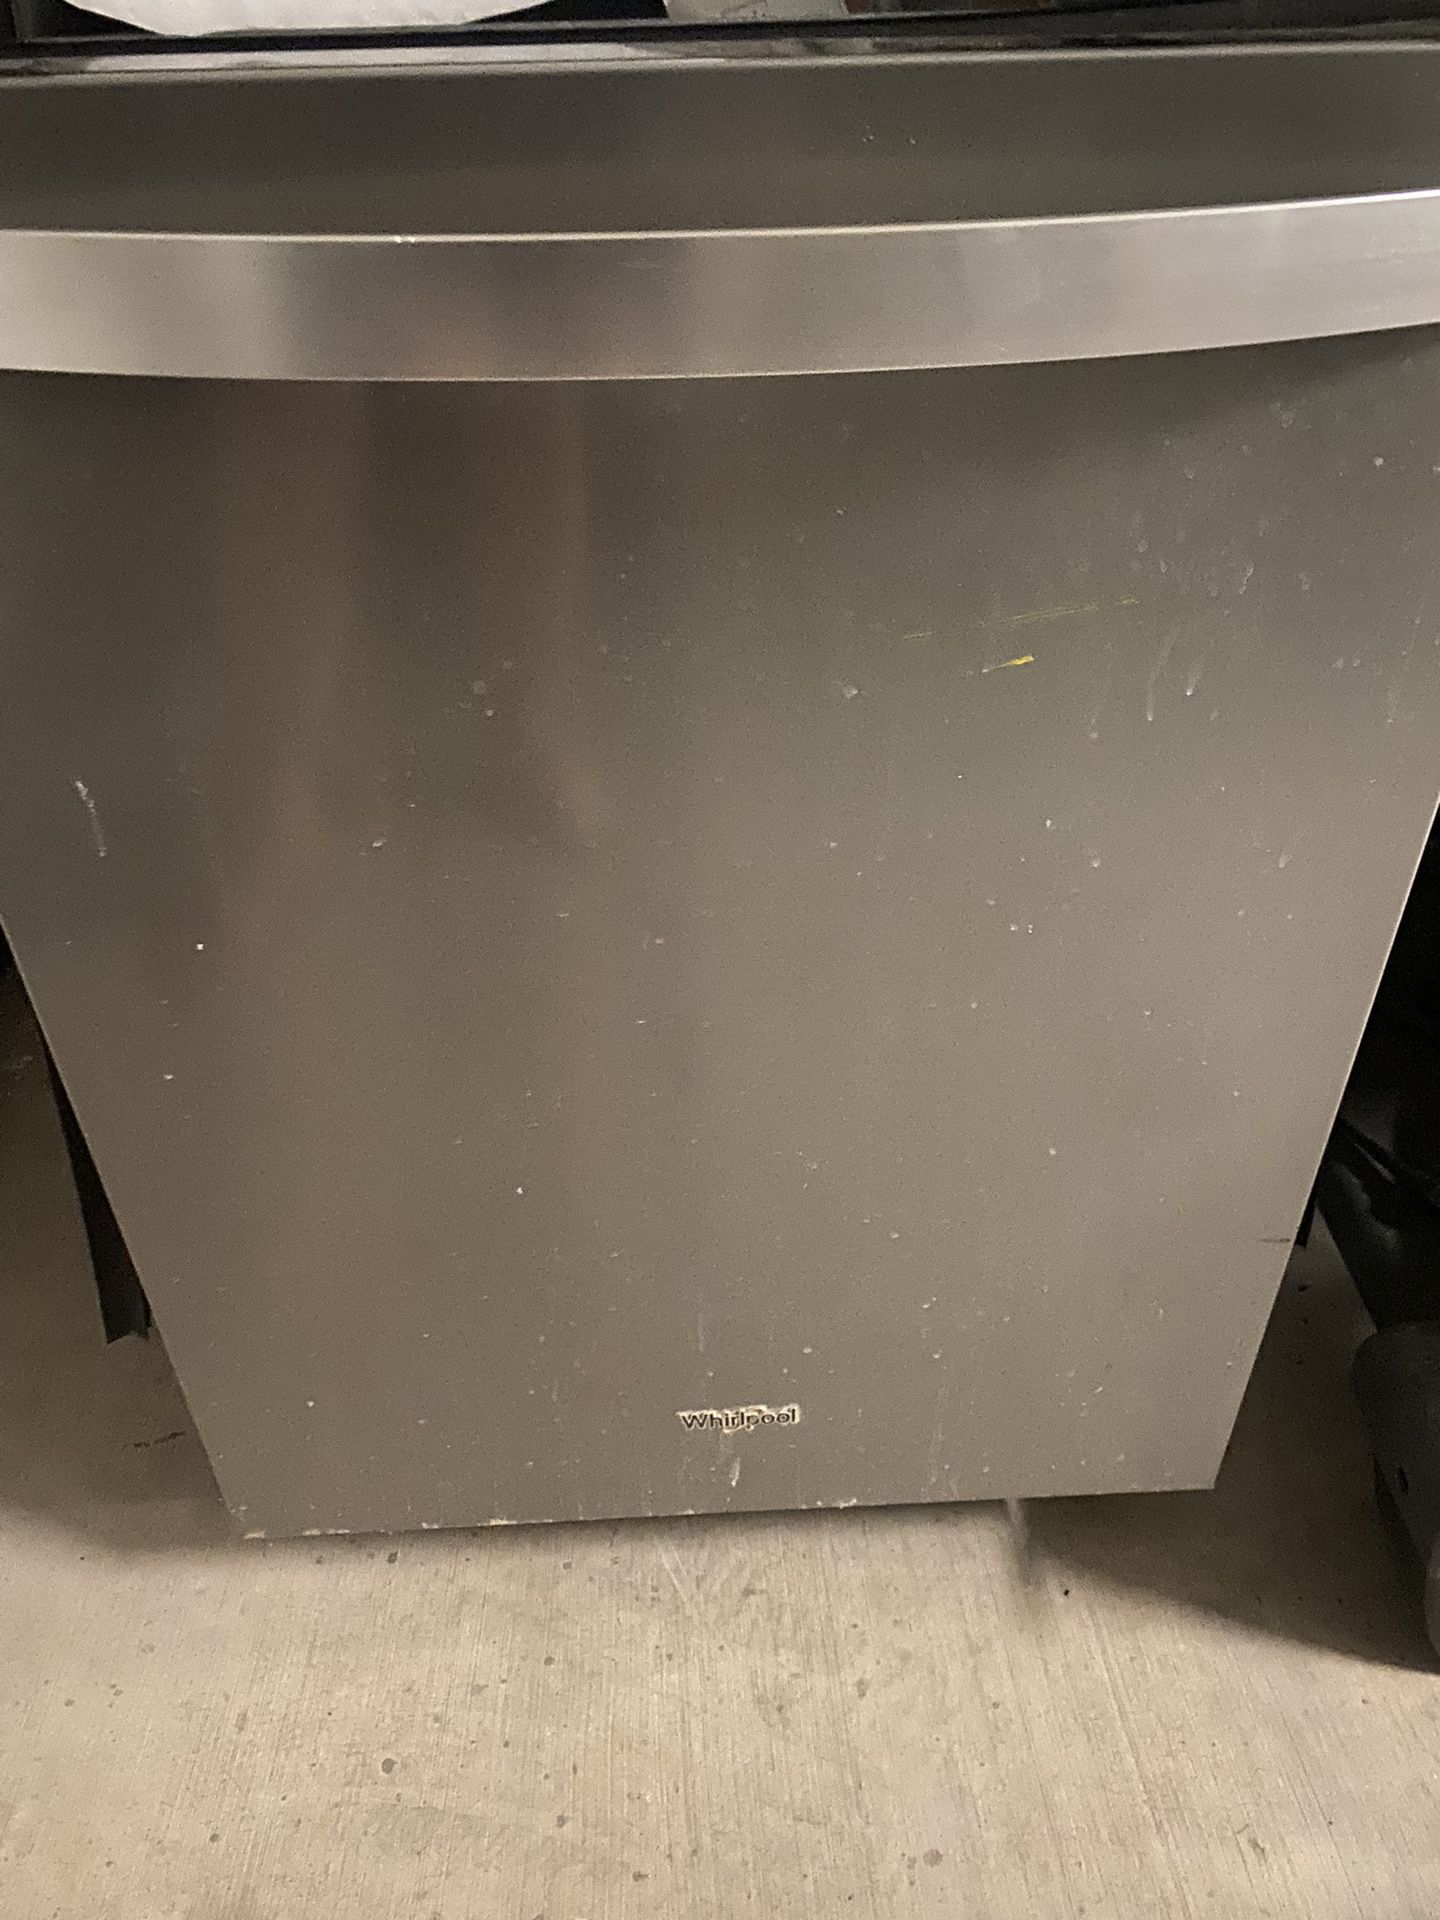 Broken Dishwasher Whirlpool 